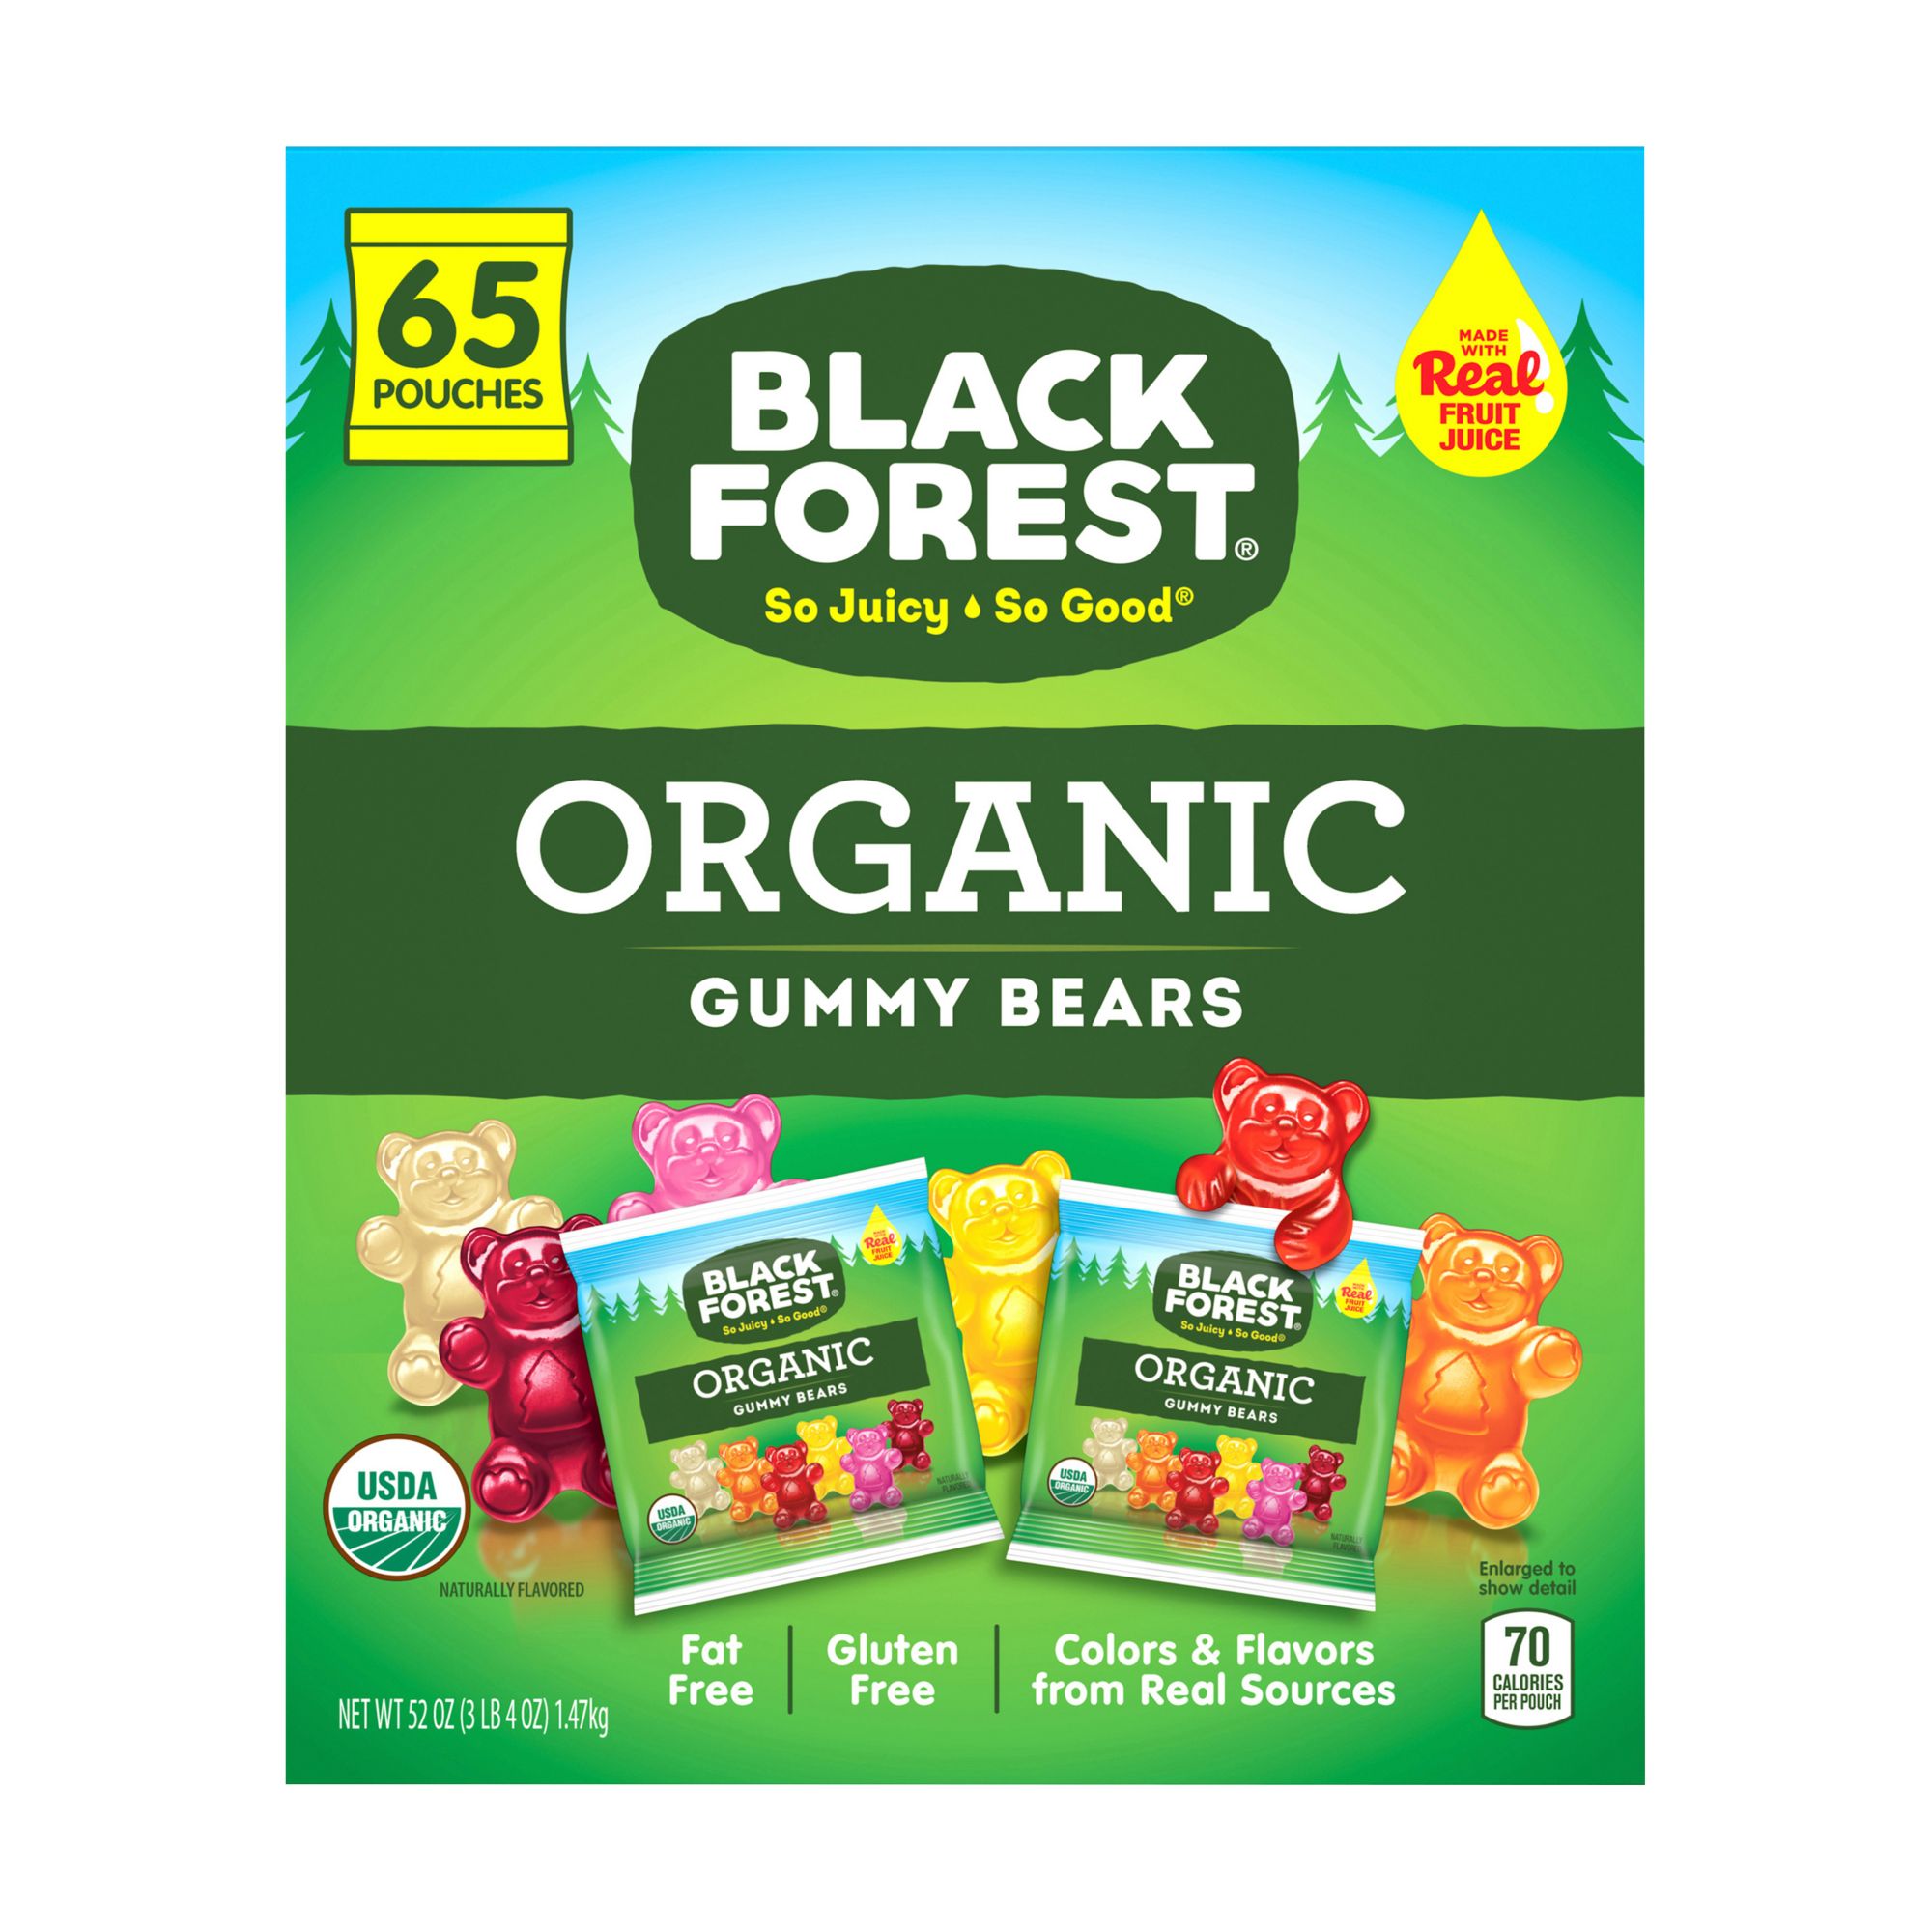 Black Forest Organic Gummy Bears, 65 pk.